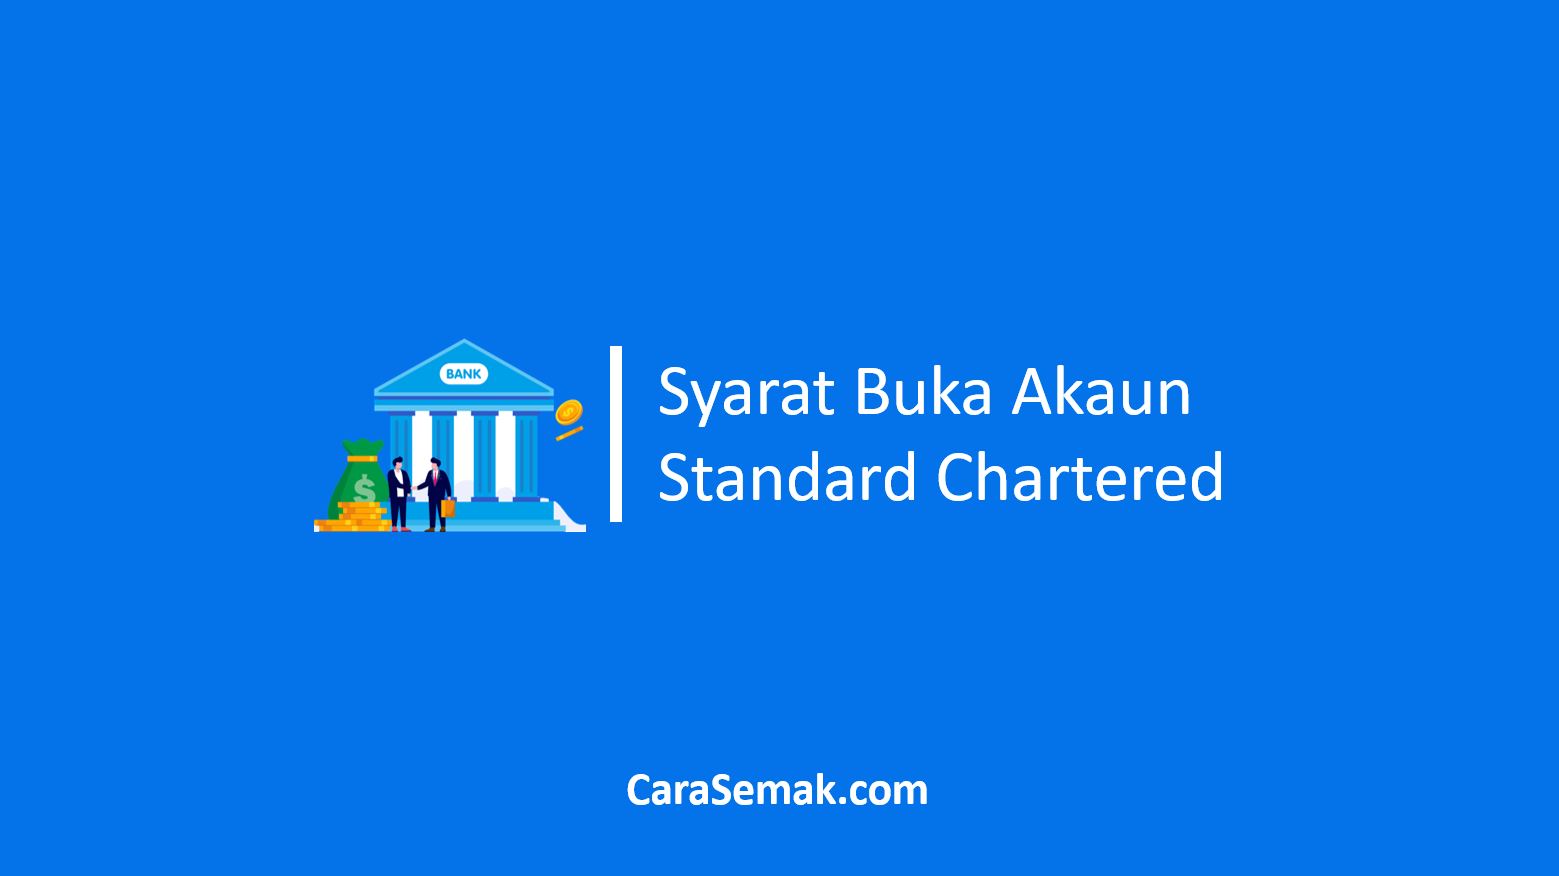 Syarat Buka Akaun Standard Chartered